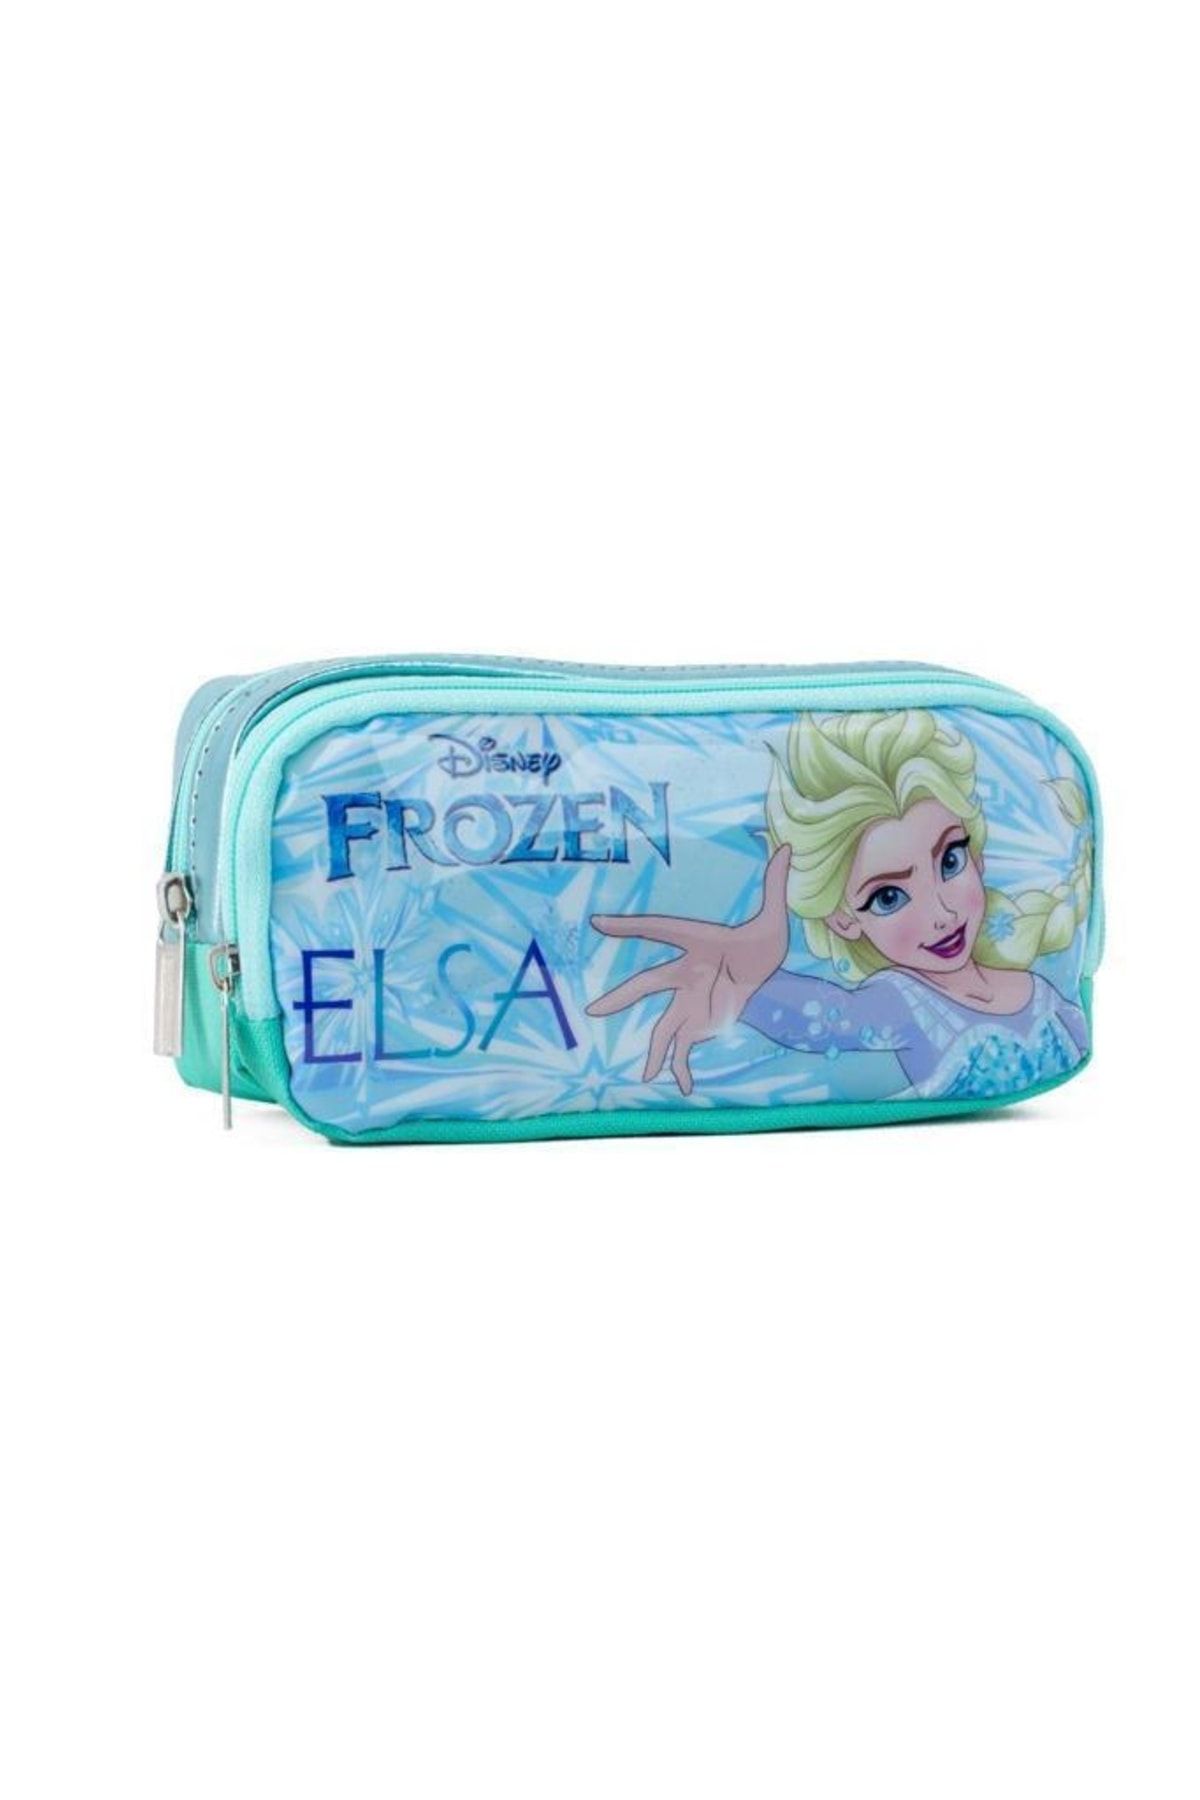 Hakan Çanta Disnep Frozen Elsa Kalem Çantası